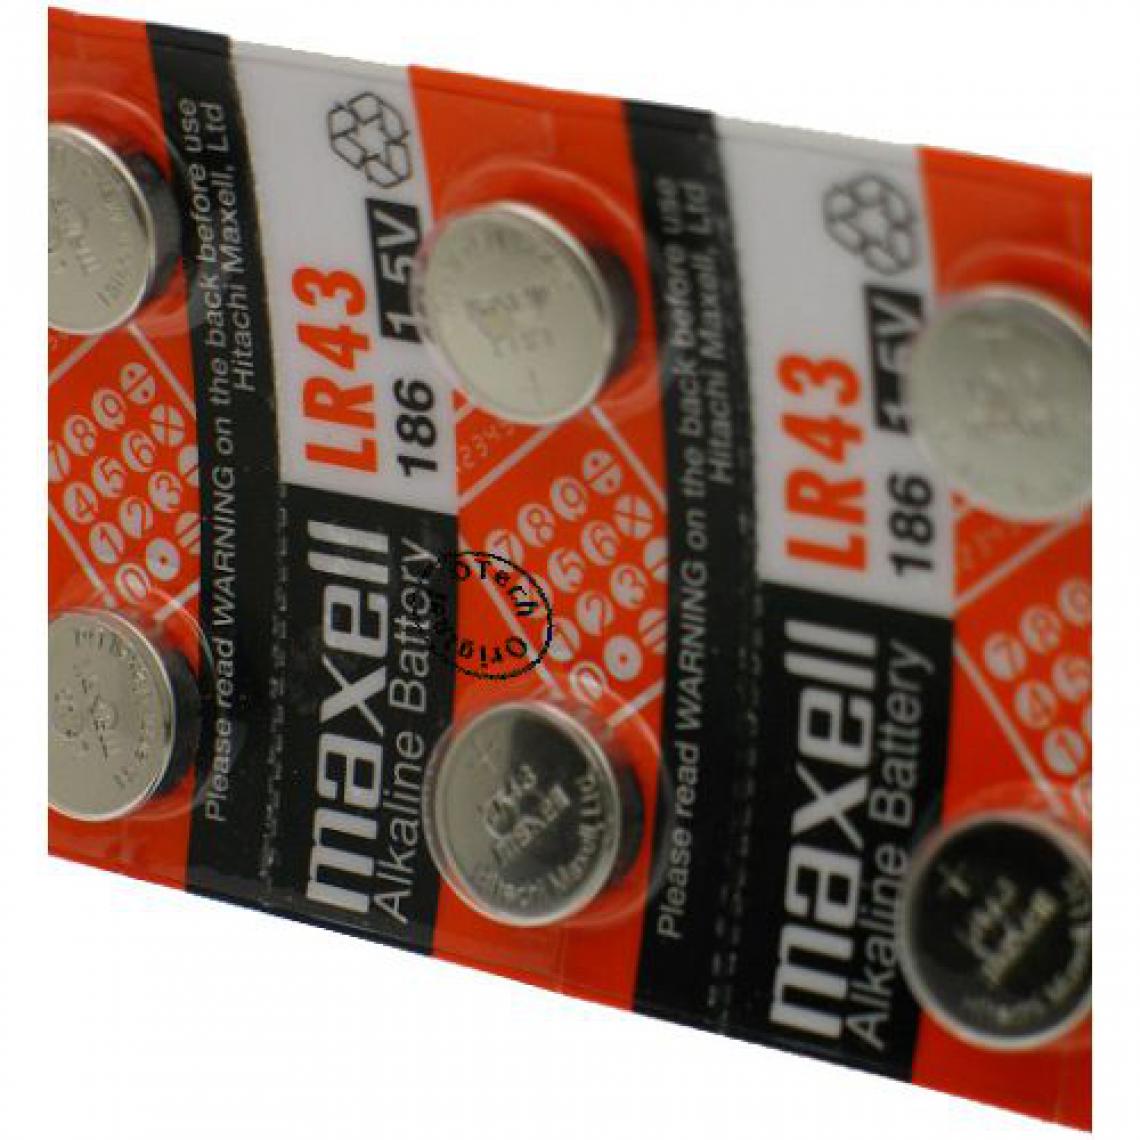 Otech - Pack de 10 piles maxell pour MAXELL LR43 - Piles rechargeables